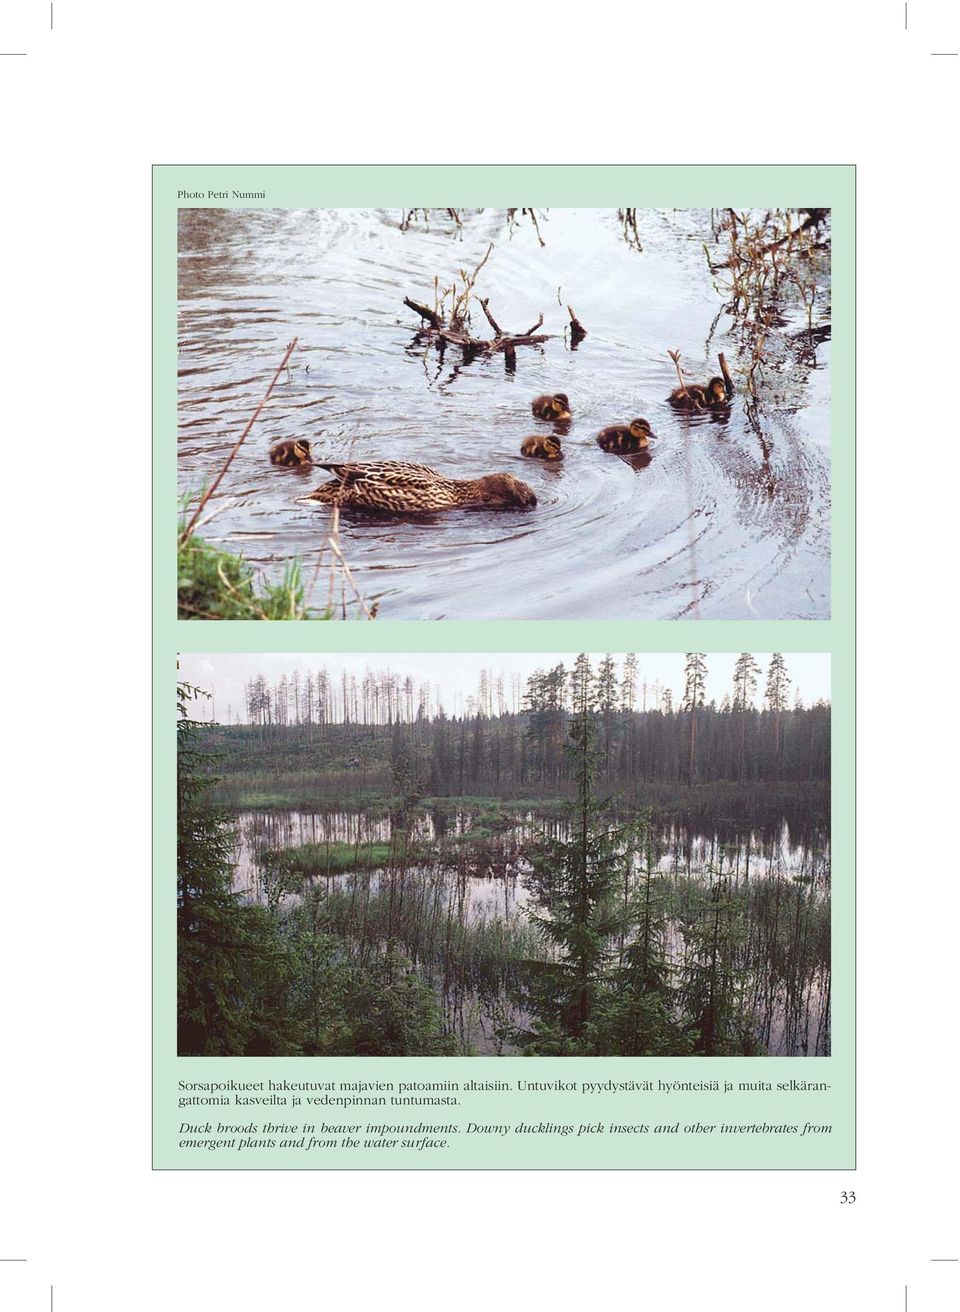 vedenpinnan tuntumasta. Duck broods thrive in beaver impoundments.